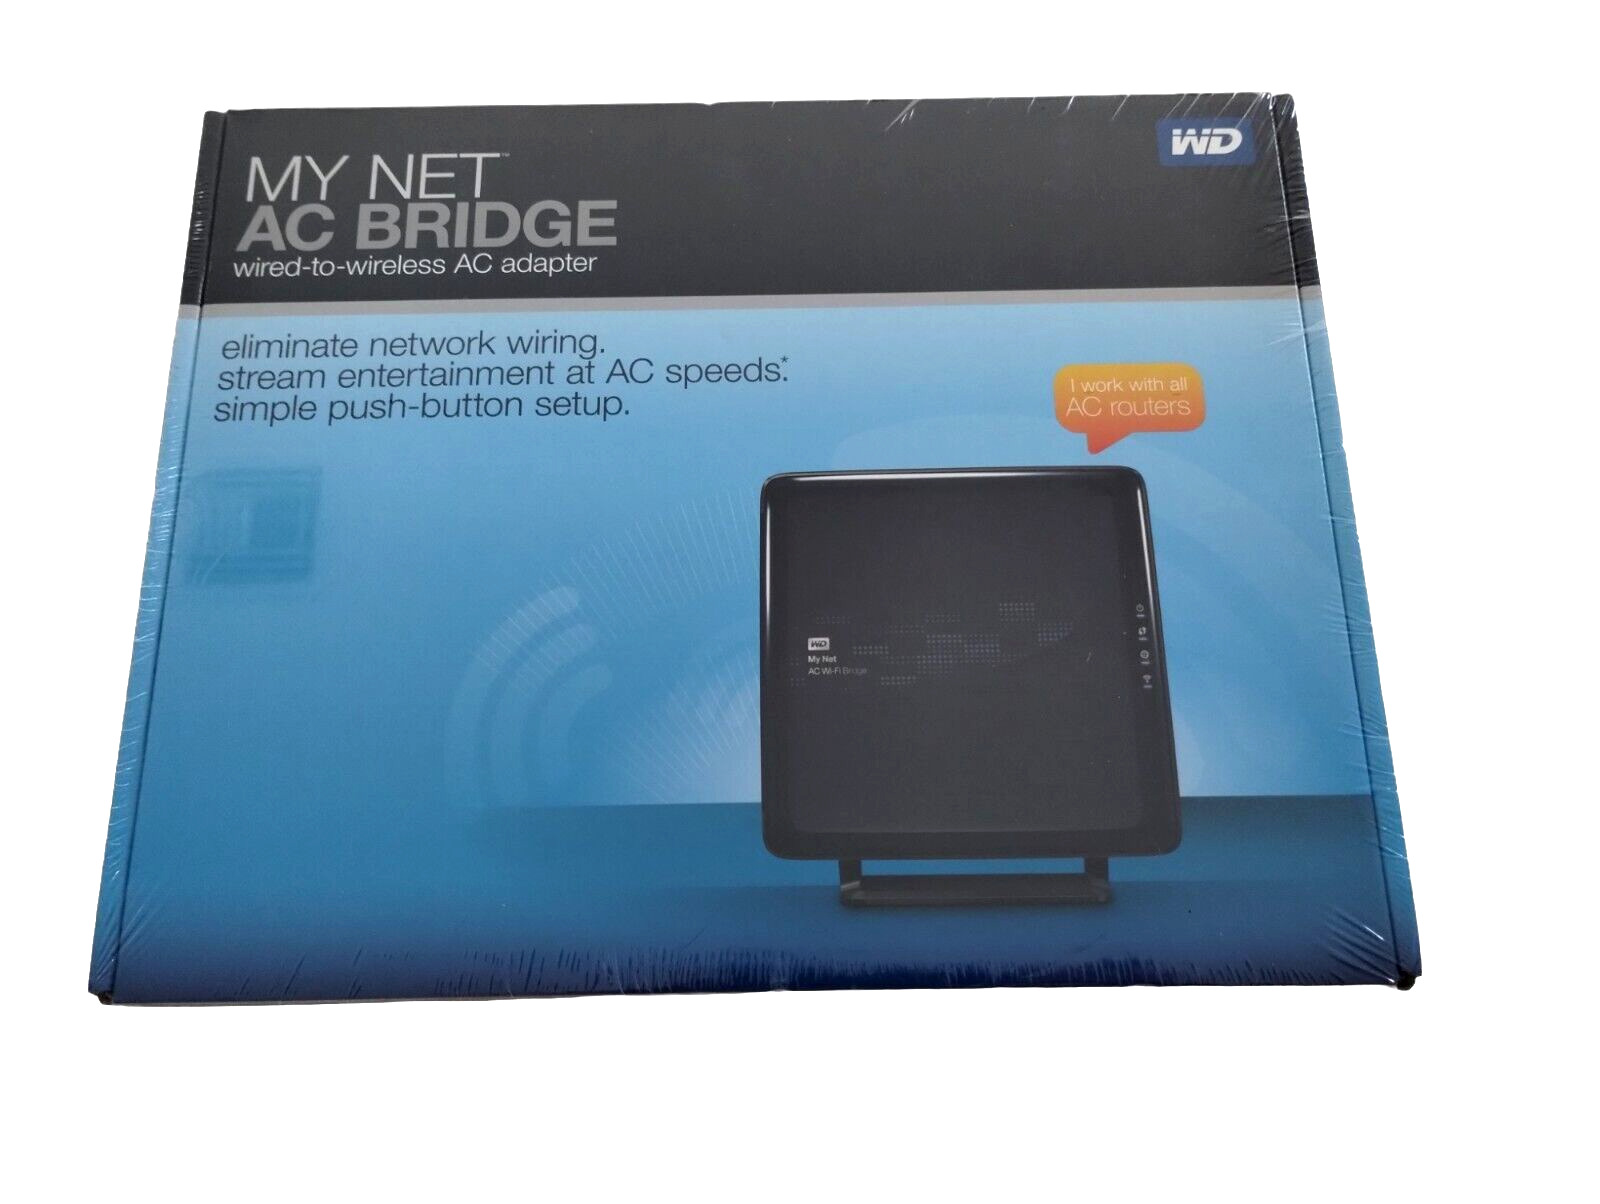 My Net AC Bridge 4-Port Gigabit WDBMRD0000NBL-HESN Brand New WD